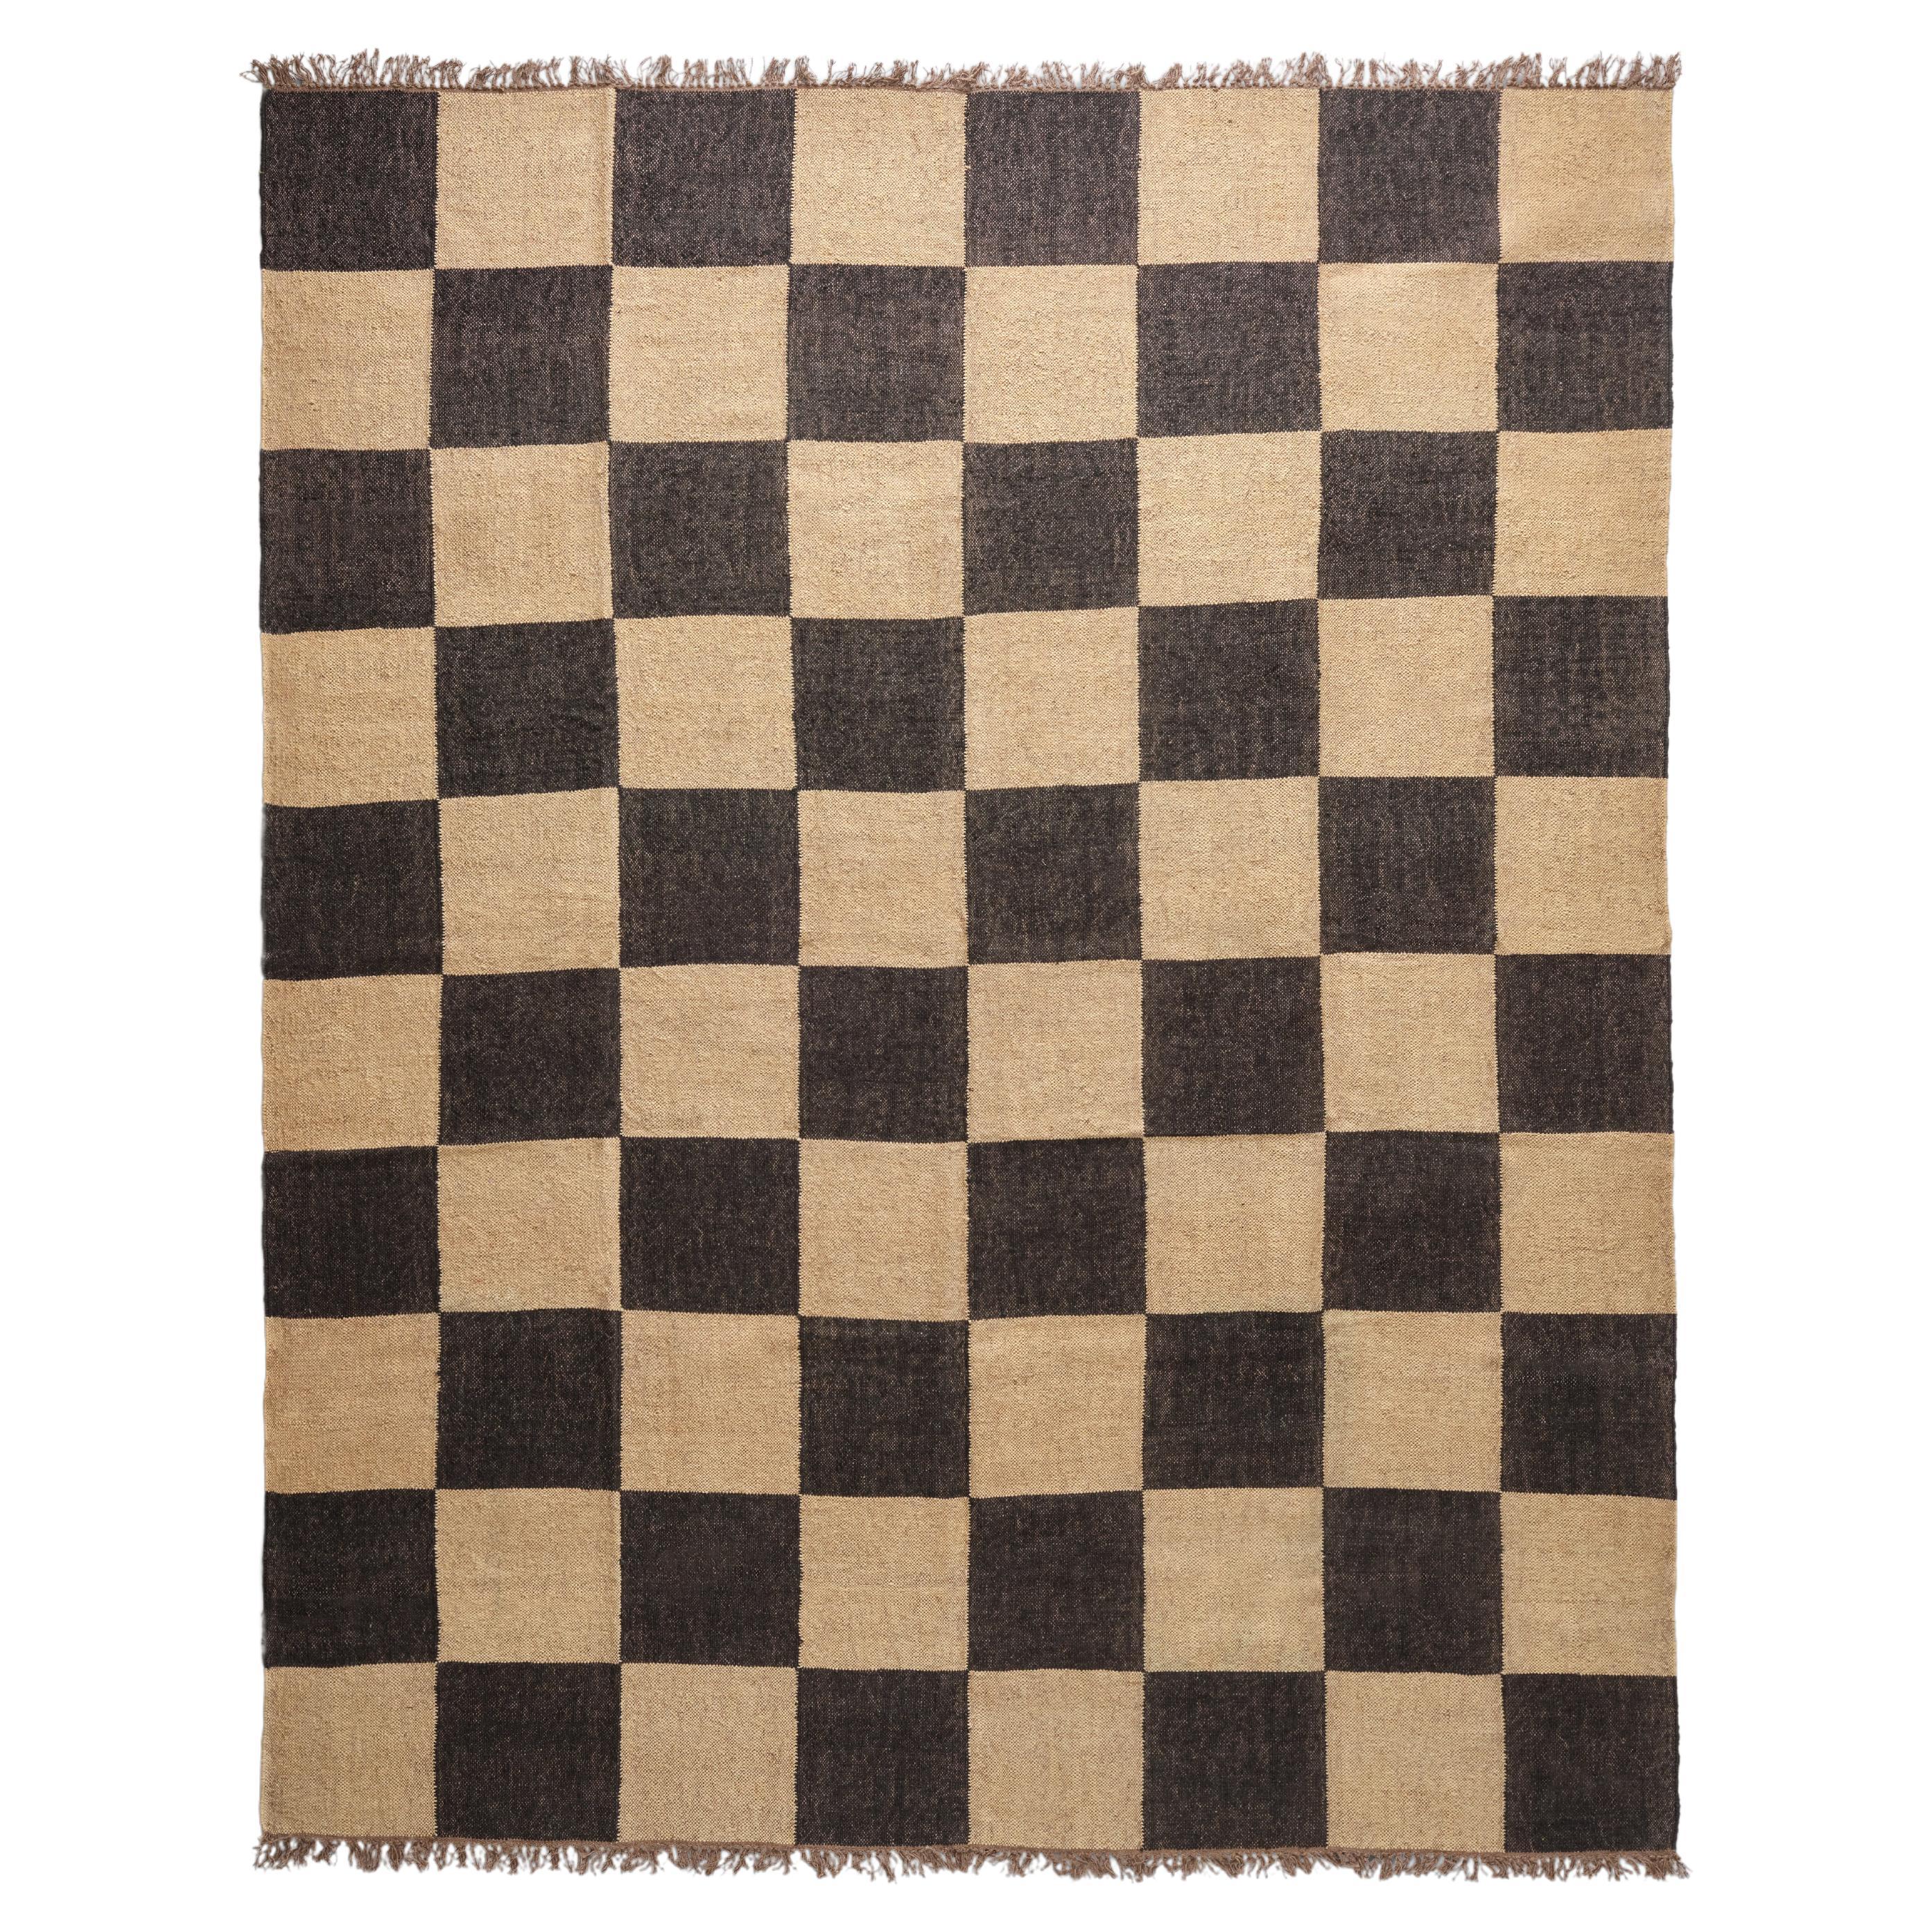 The Forsyth Checkerboard Rug - Big Checks in Off Black, 11x14